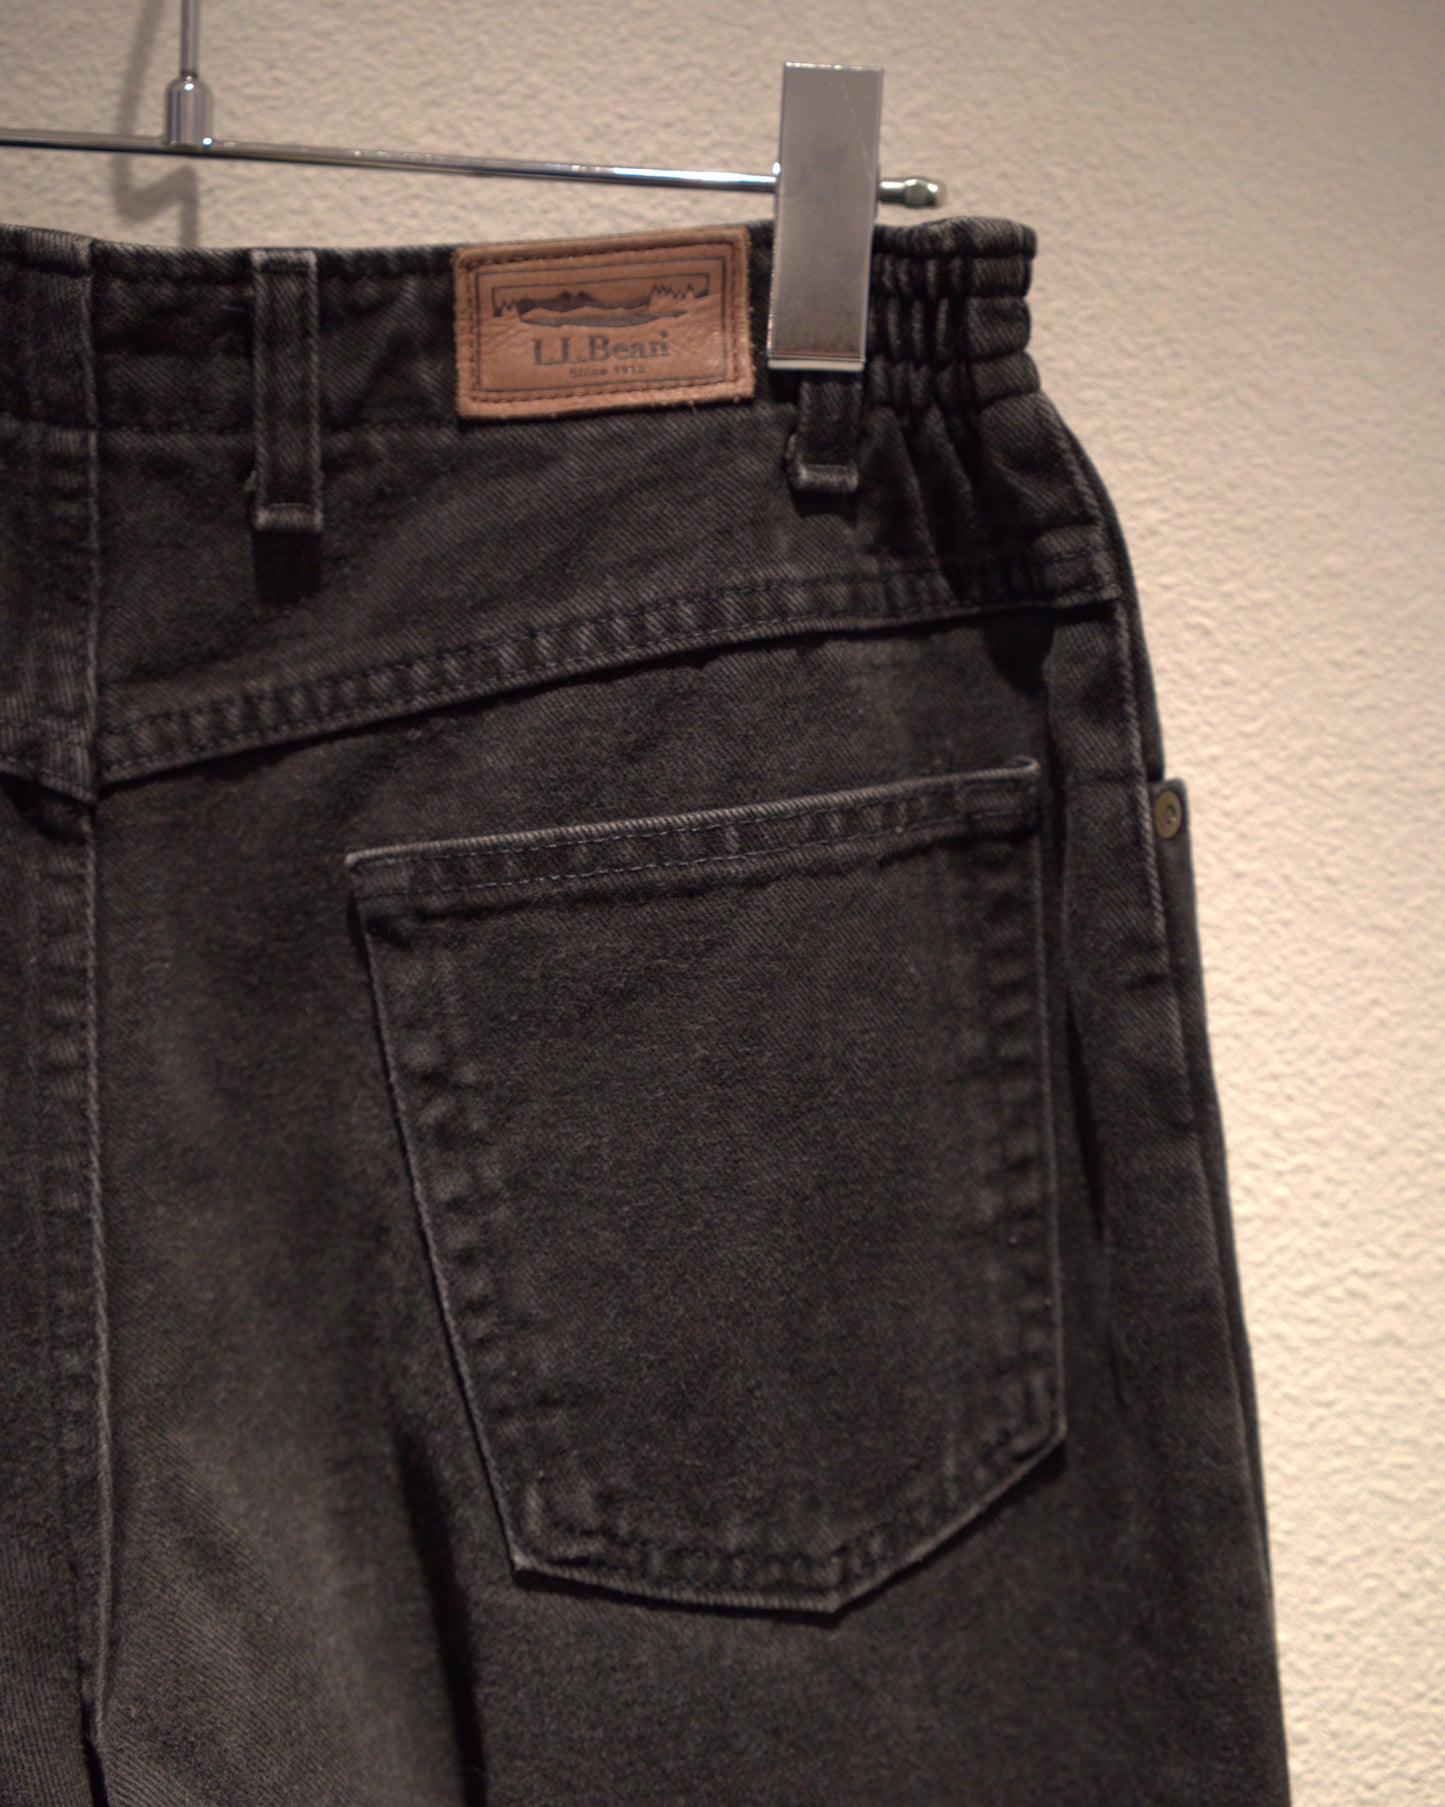 90’s Black jeans